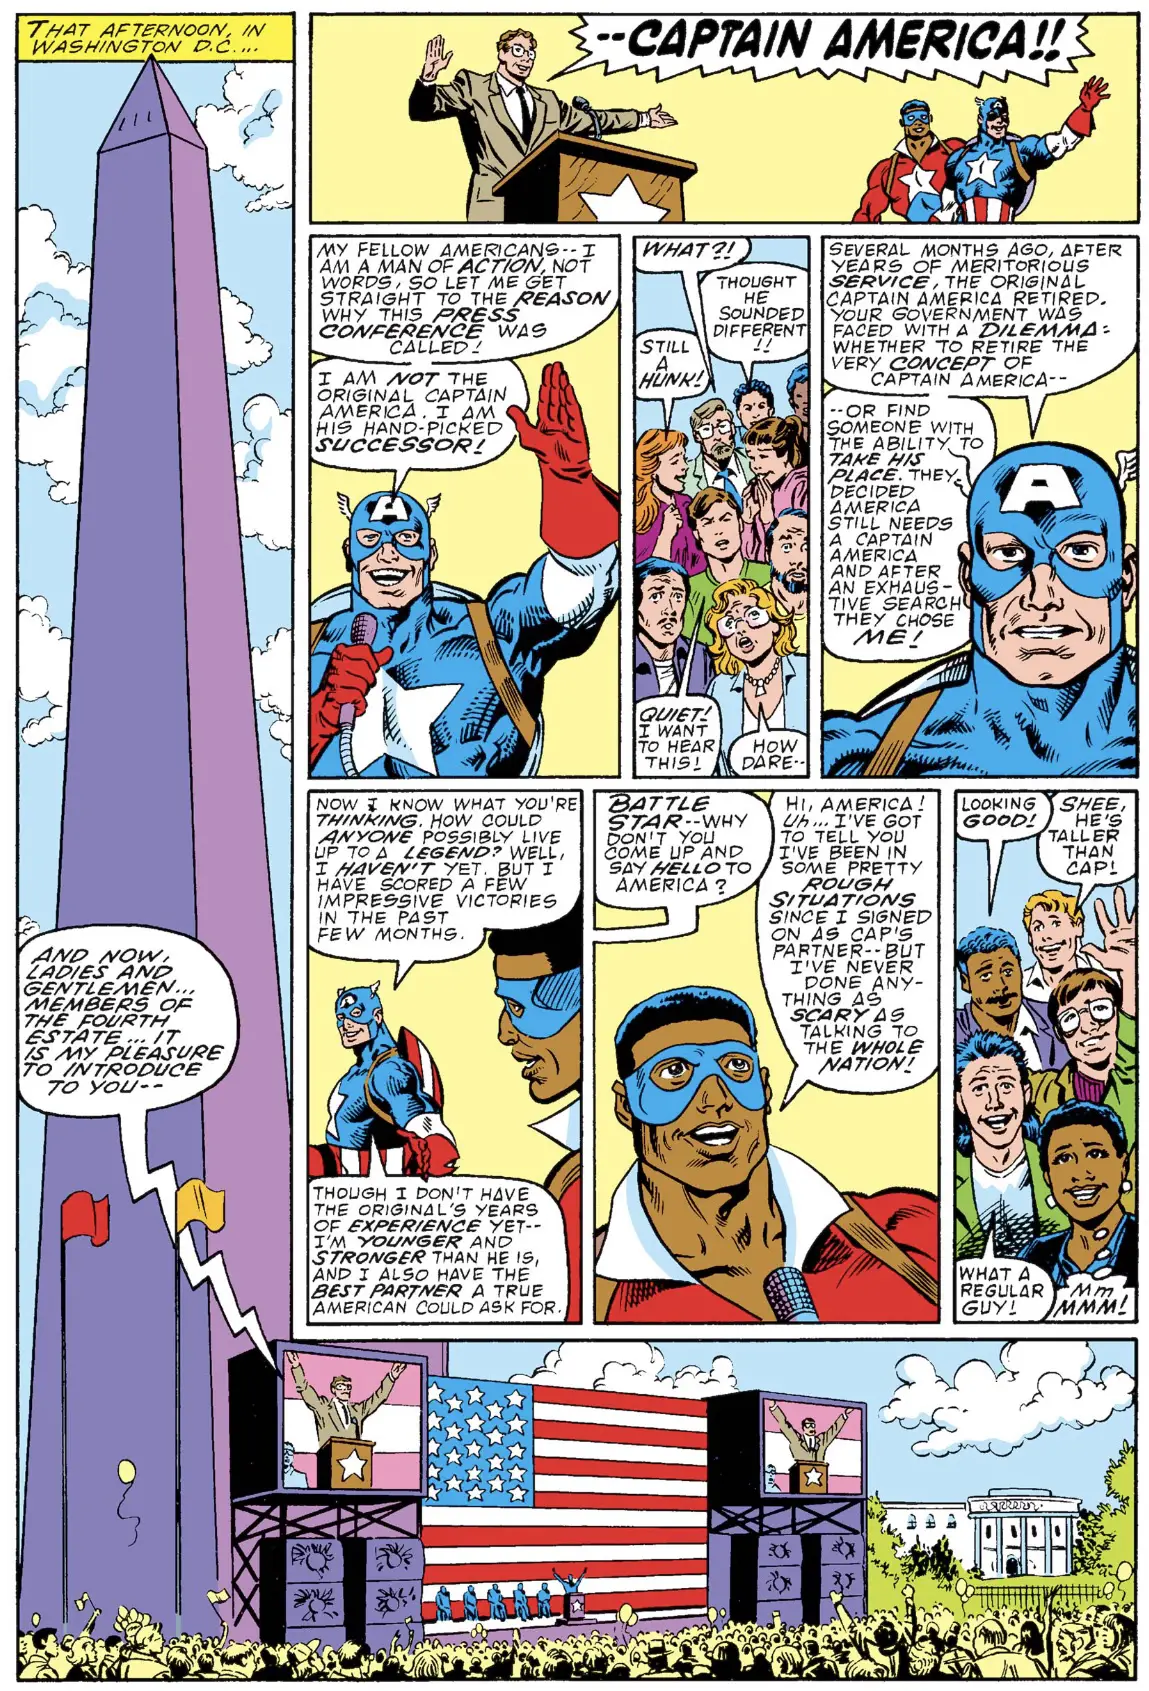 Captain America #341 Battlestar intro